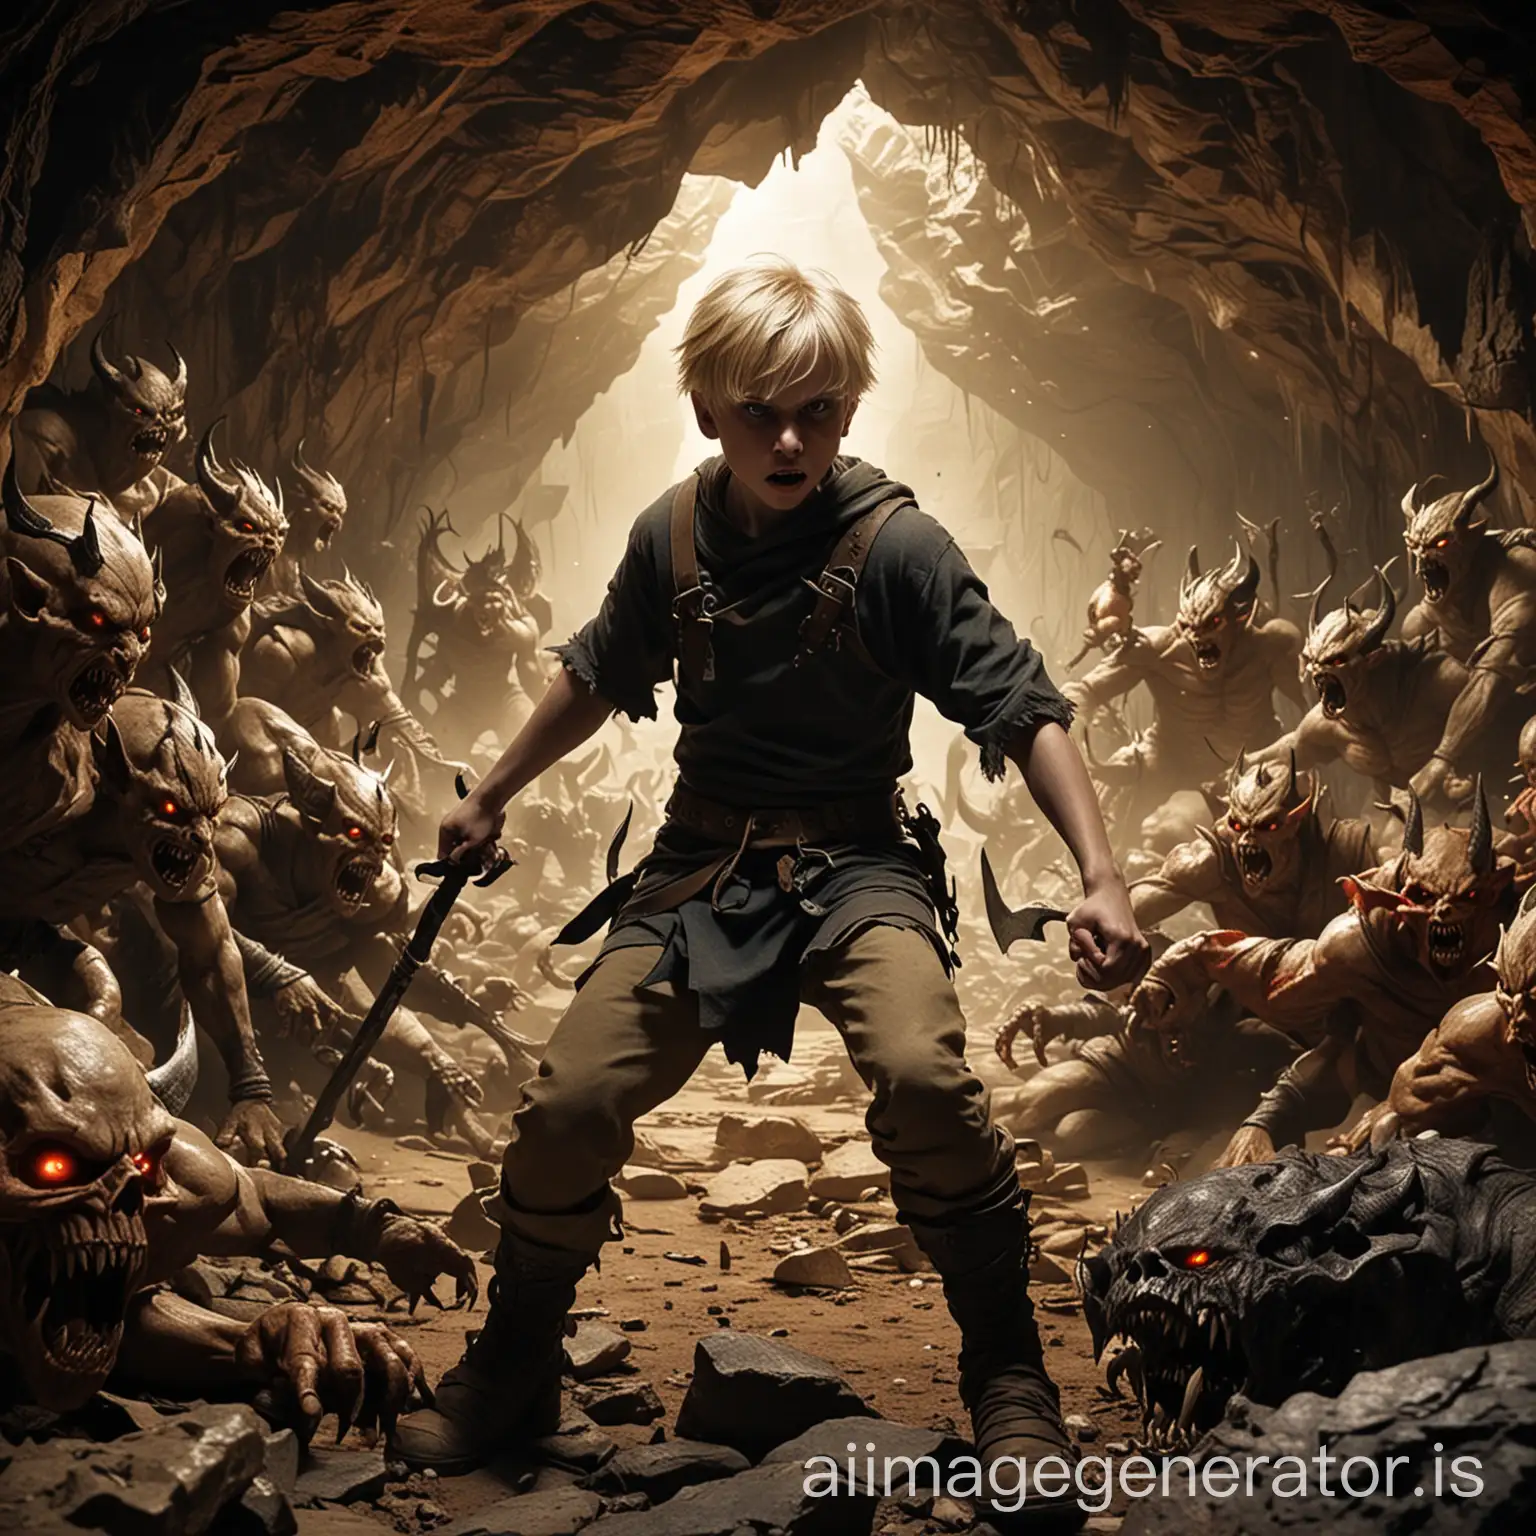 Brave-Young-Warrior-Battling-Demonic-Forces-in-Dark-Cave